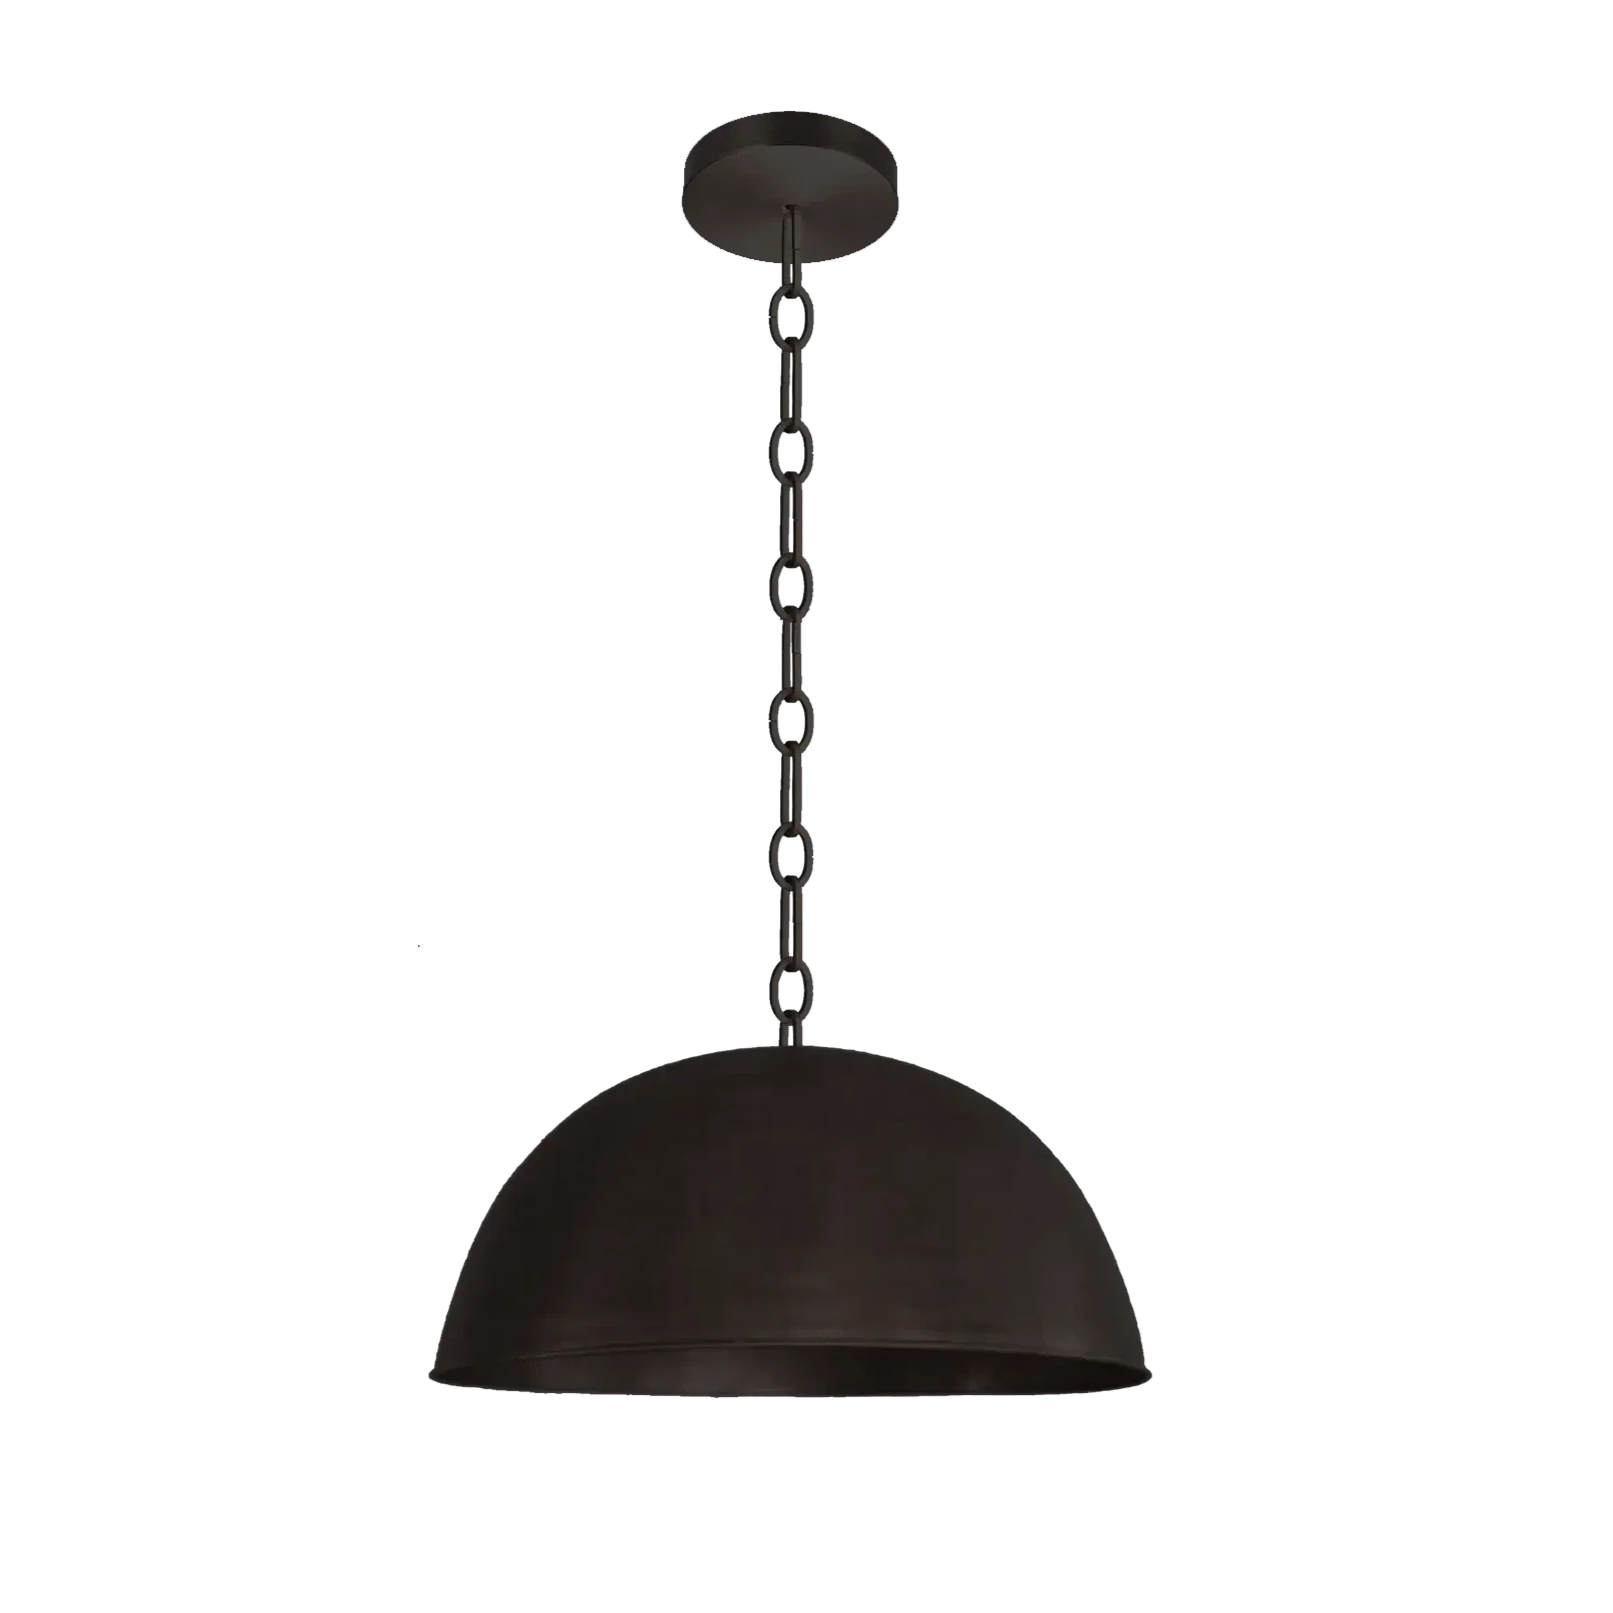 Dounia home Pendant light in black made of Metal, Model: Quba lagre Dome